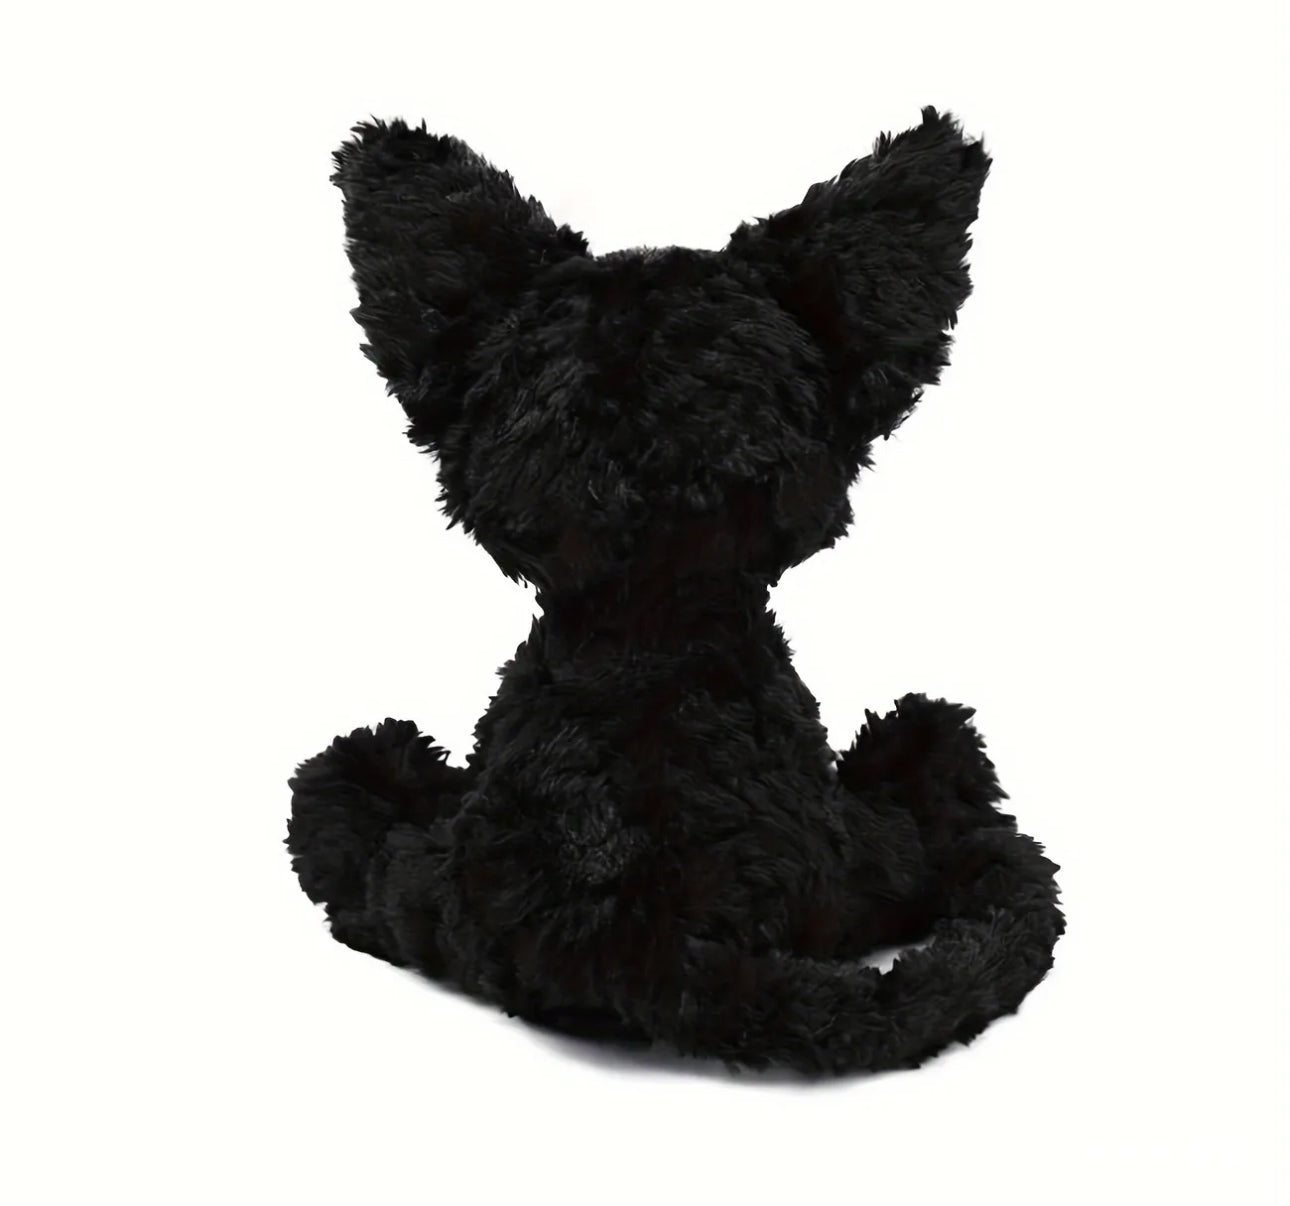 Kawaii Black Cat Plush